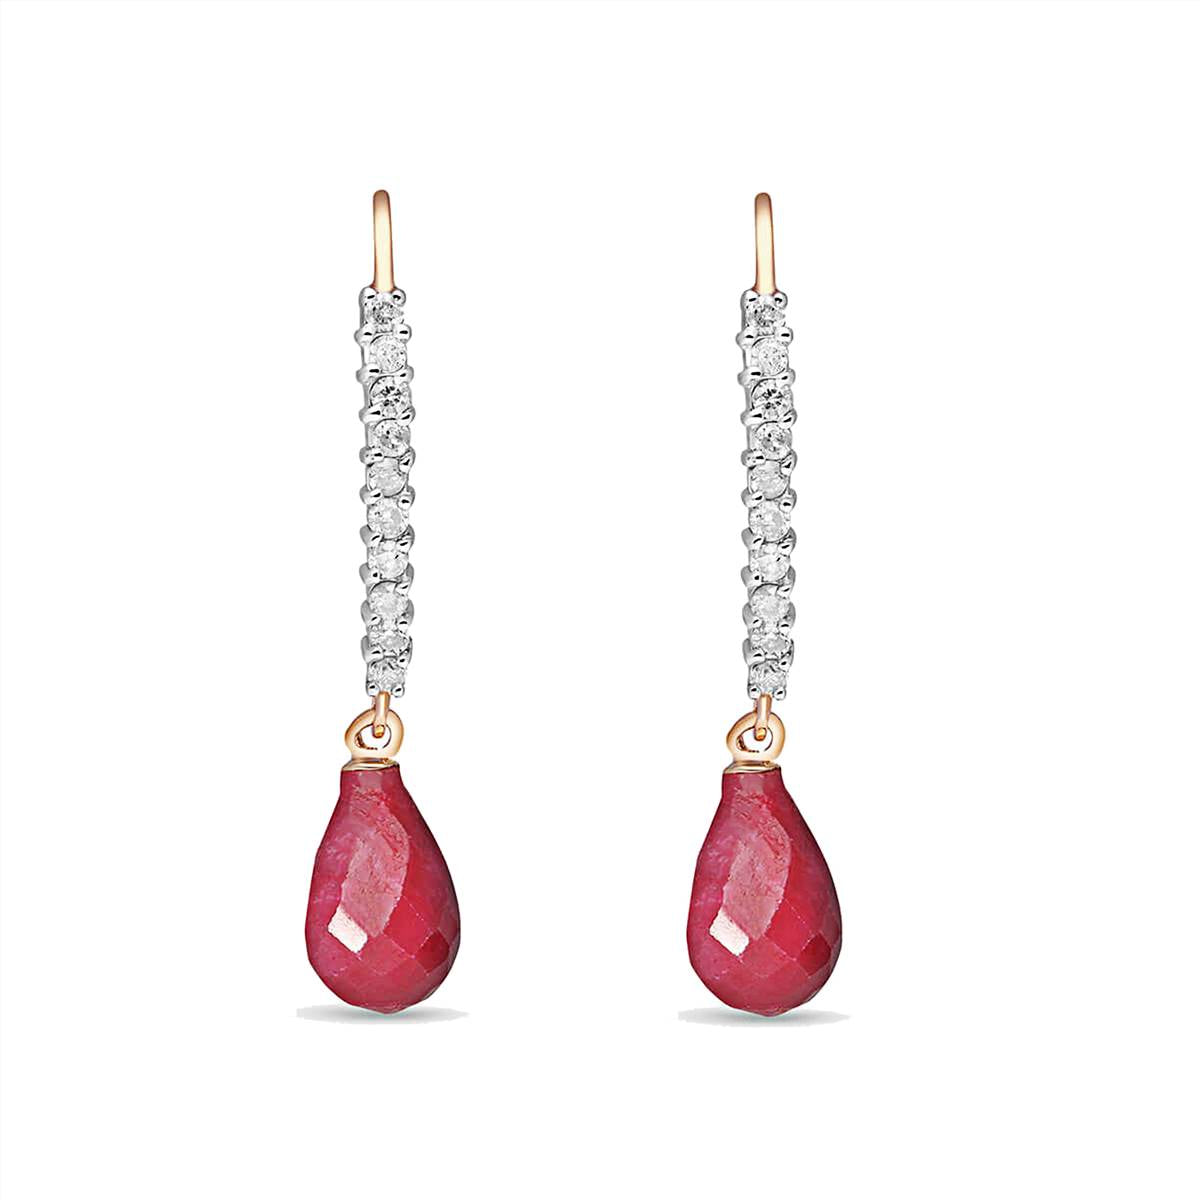 14K Solid Rose Gold Leverback Earrings Diamond & Ruby Gemstone